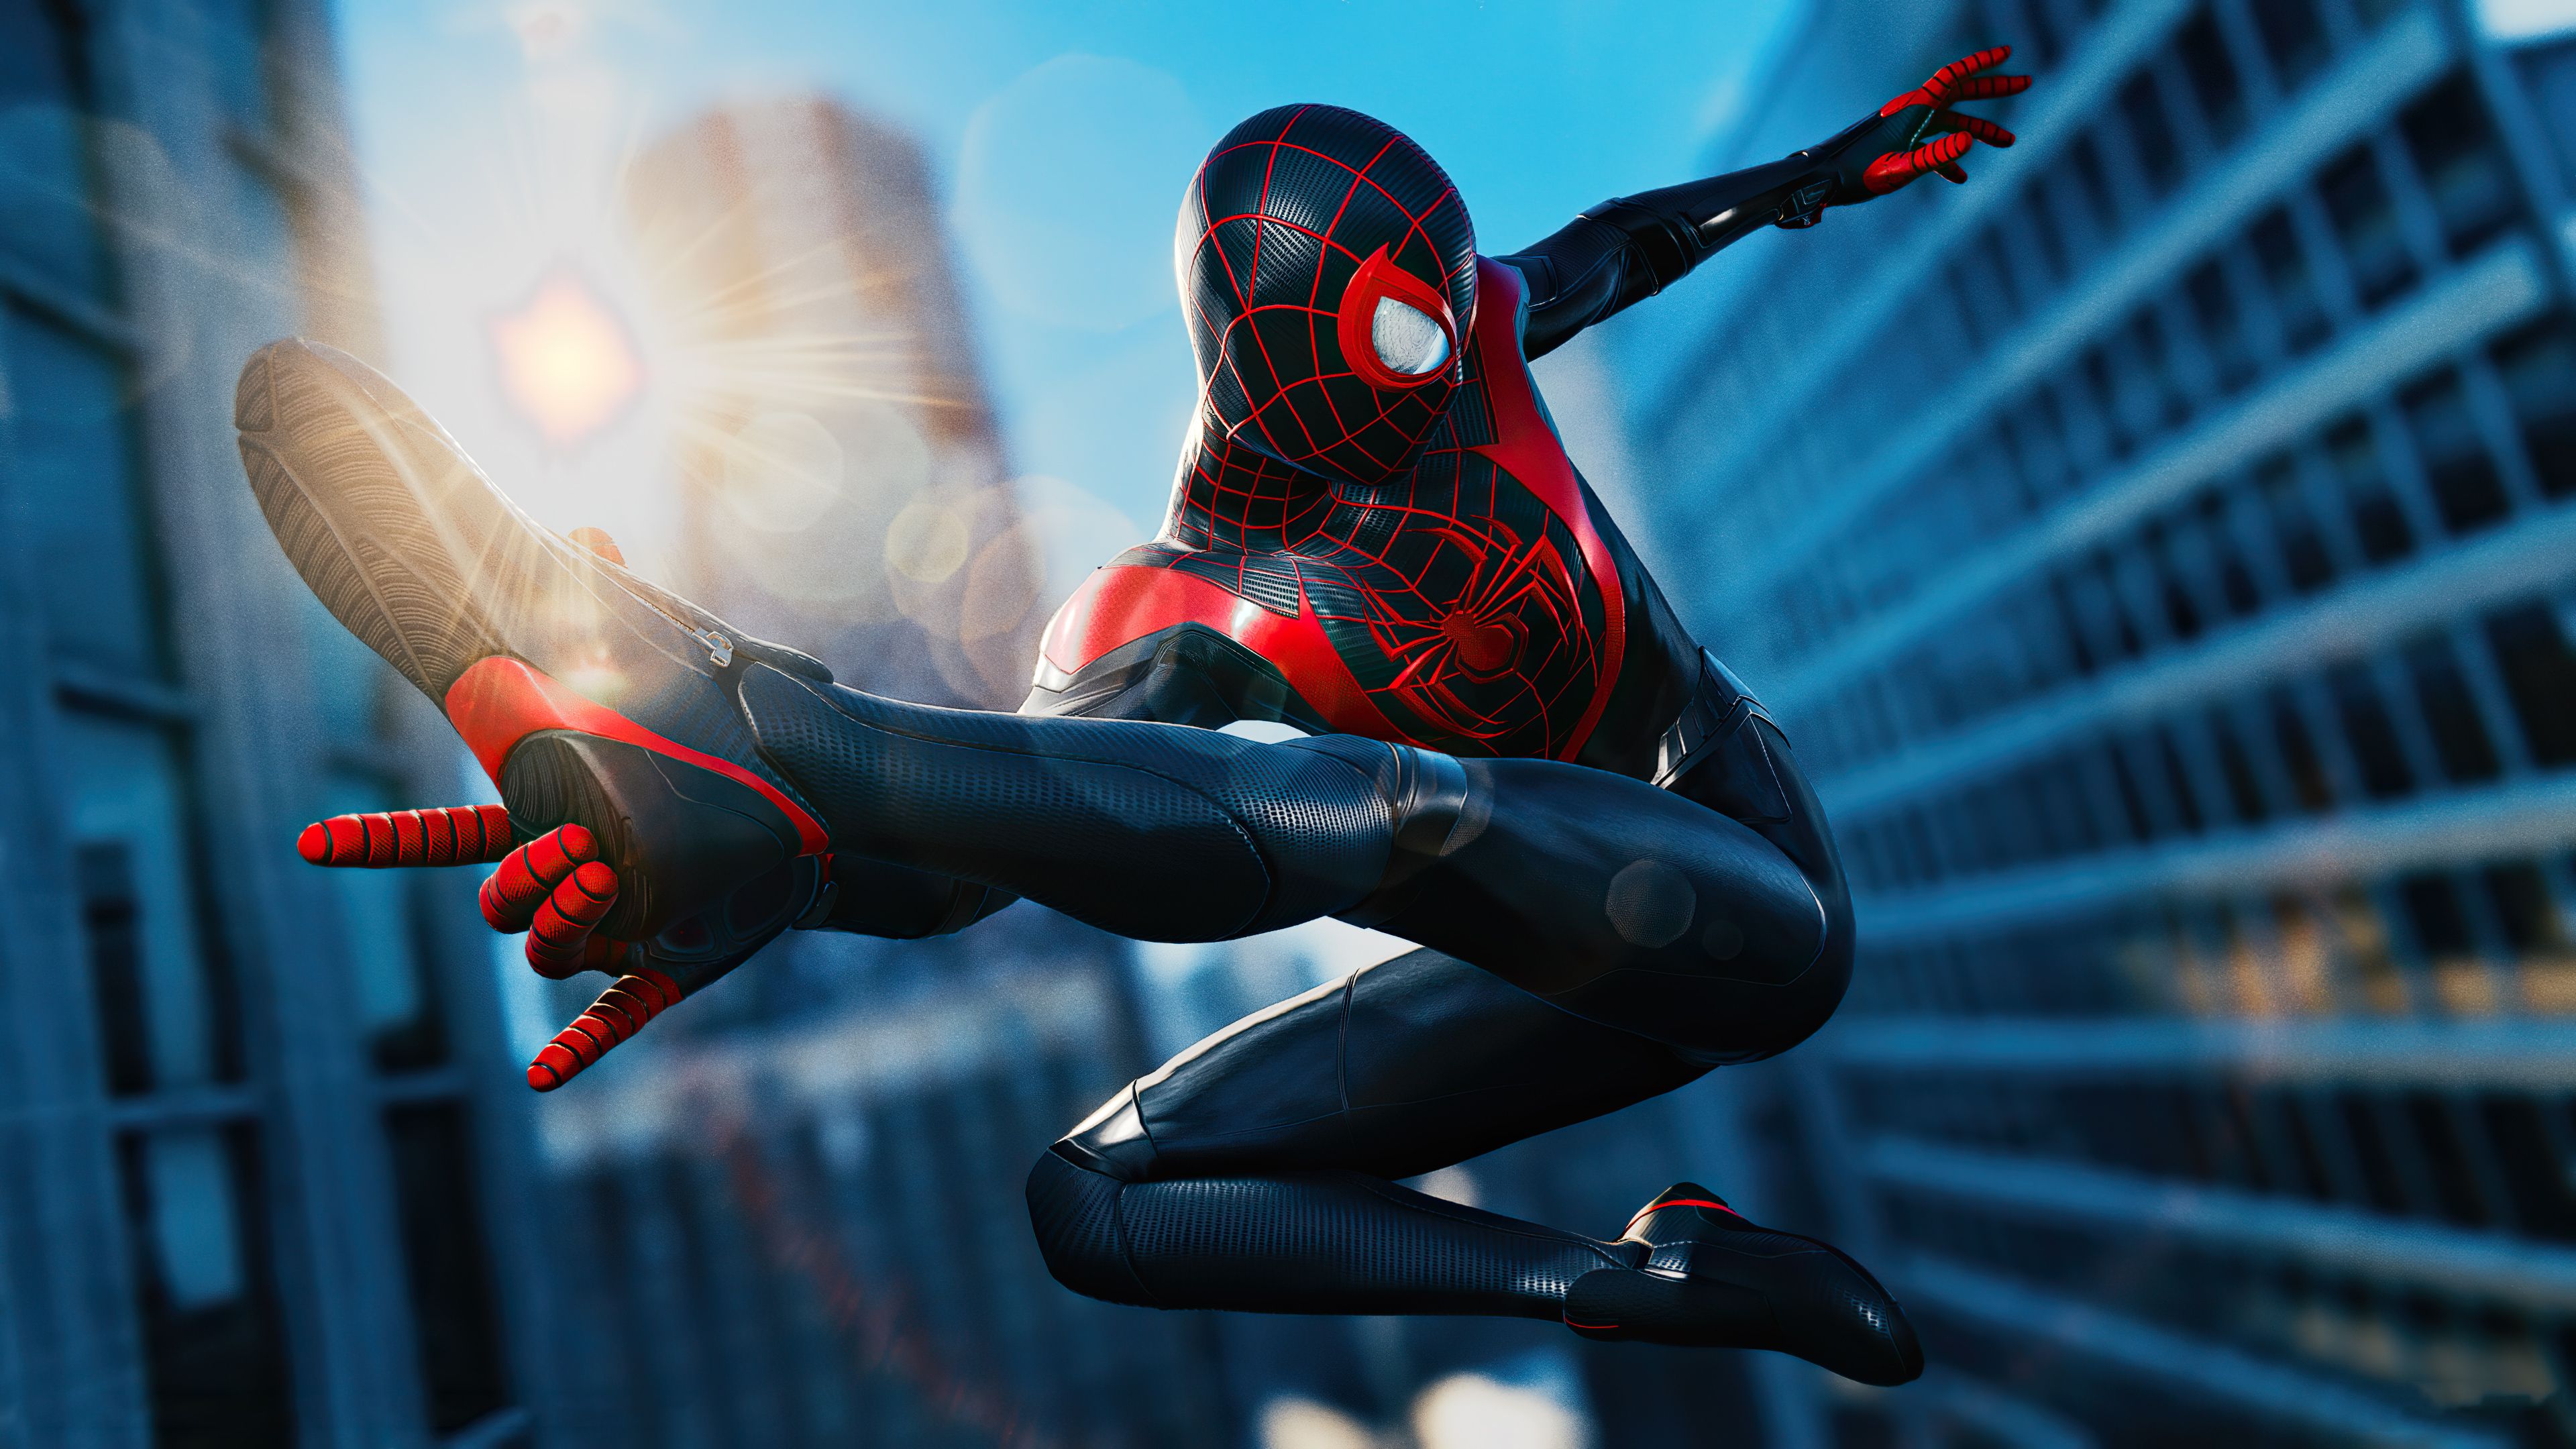 Marvel's Spider Man: Miles Morales 4K Wallpaper, Photo Mode, PlayStation 2020 Games, Games